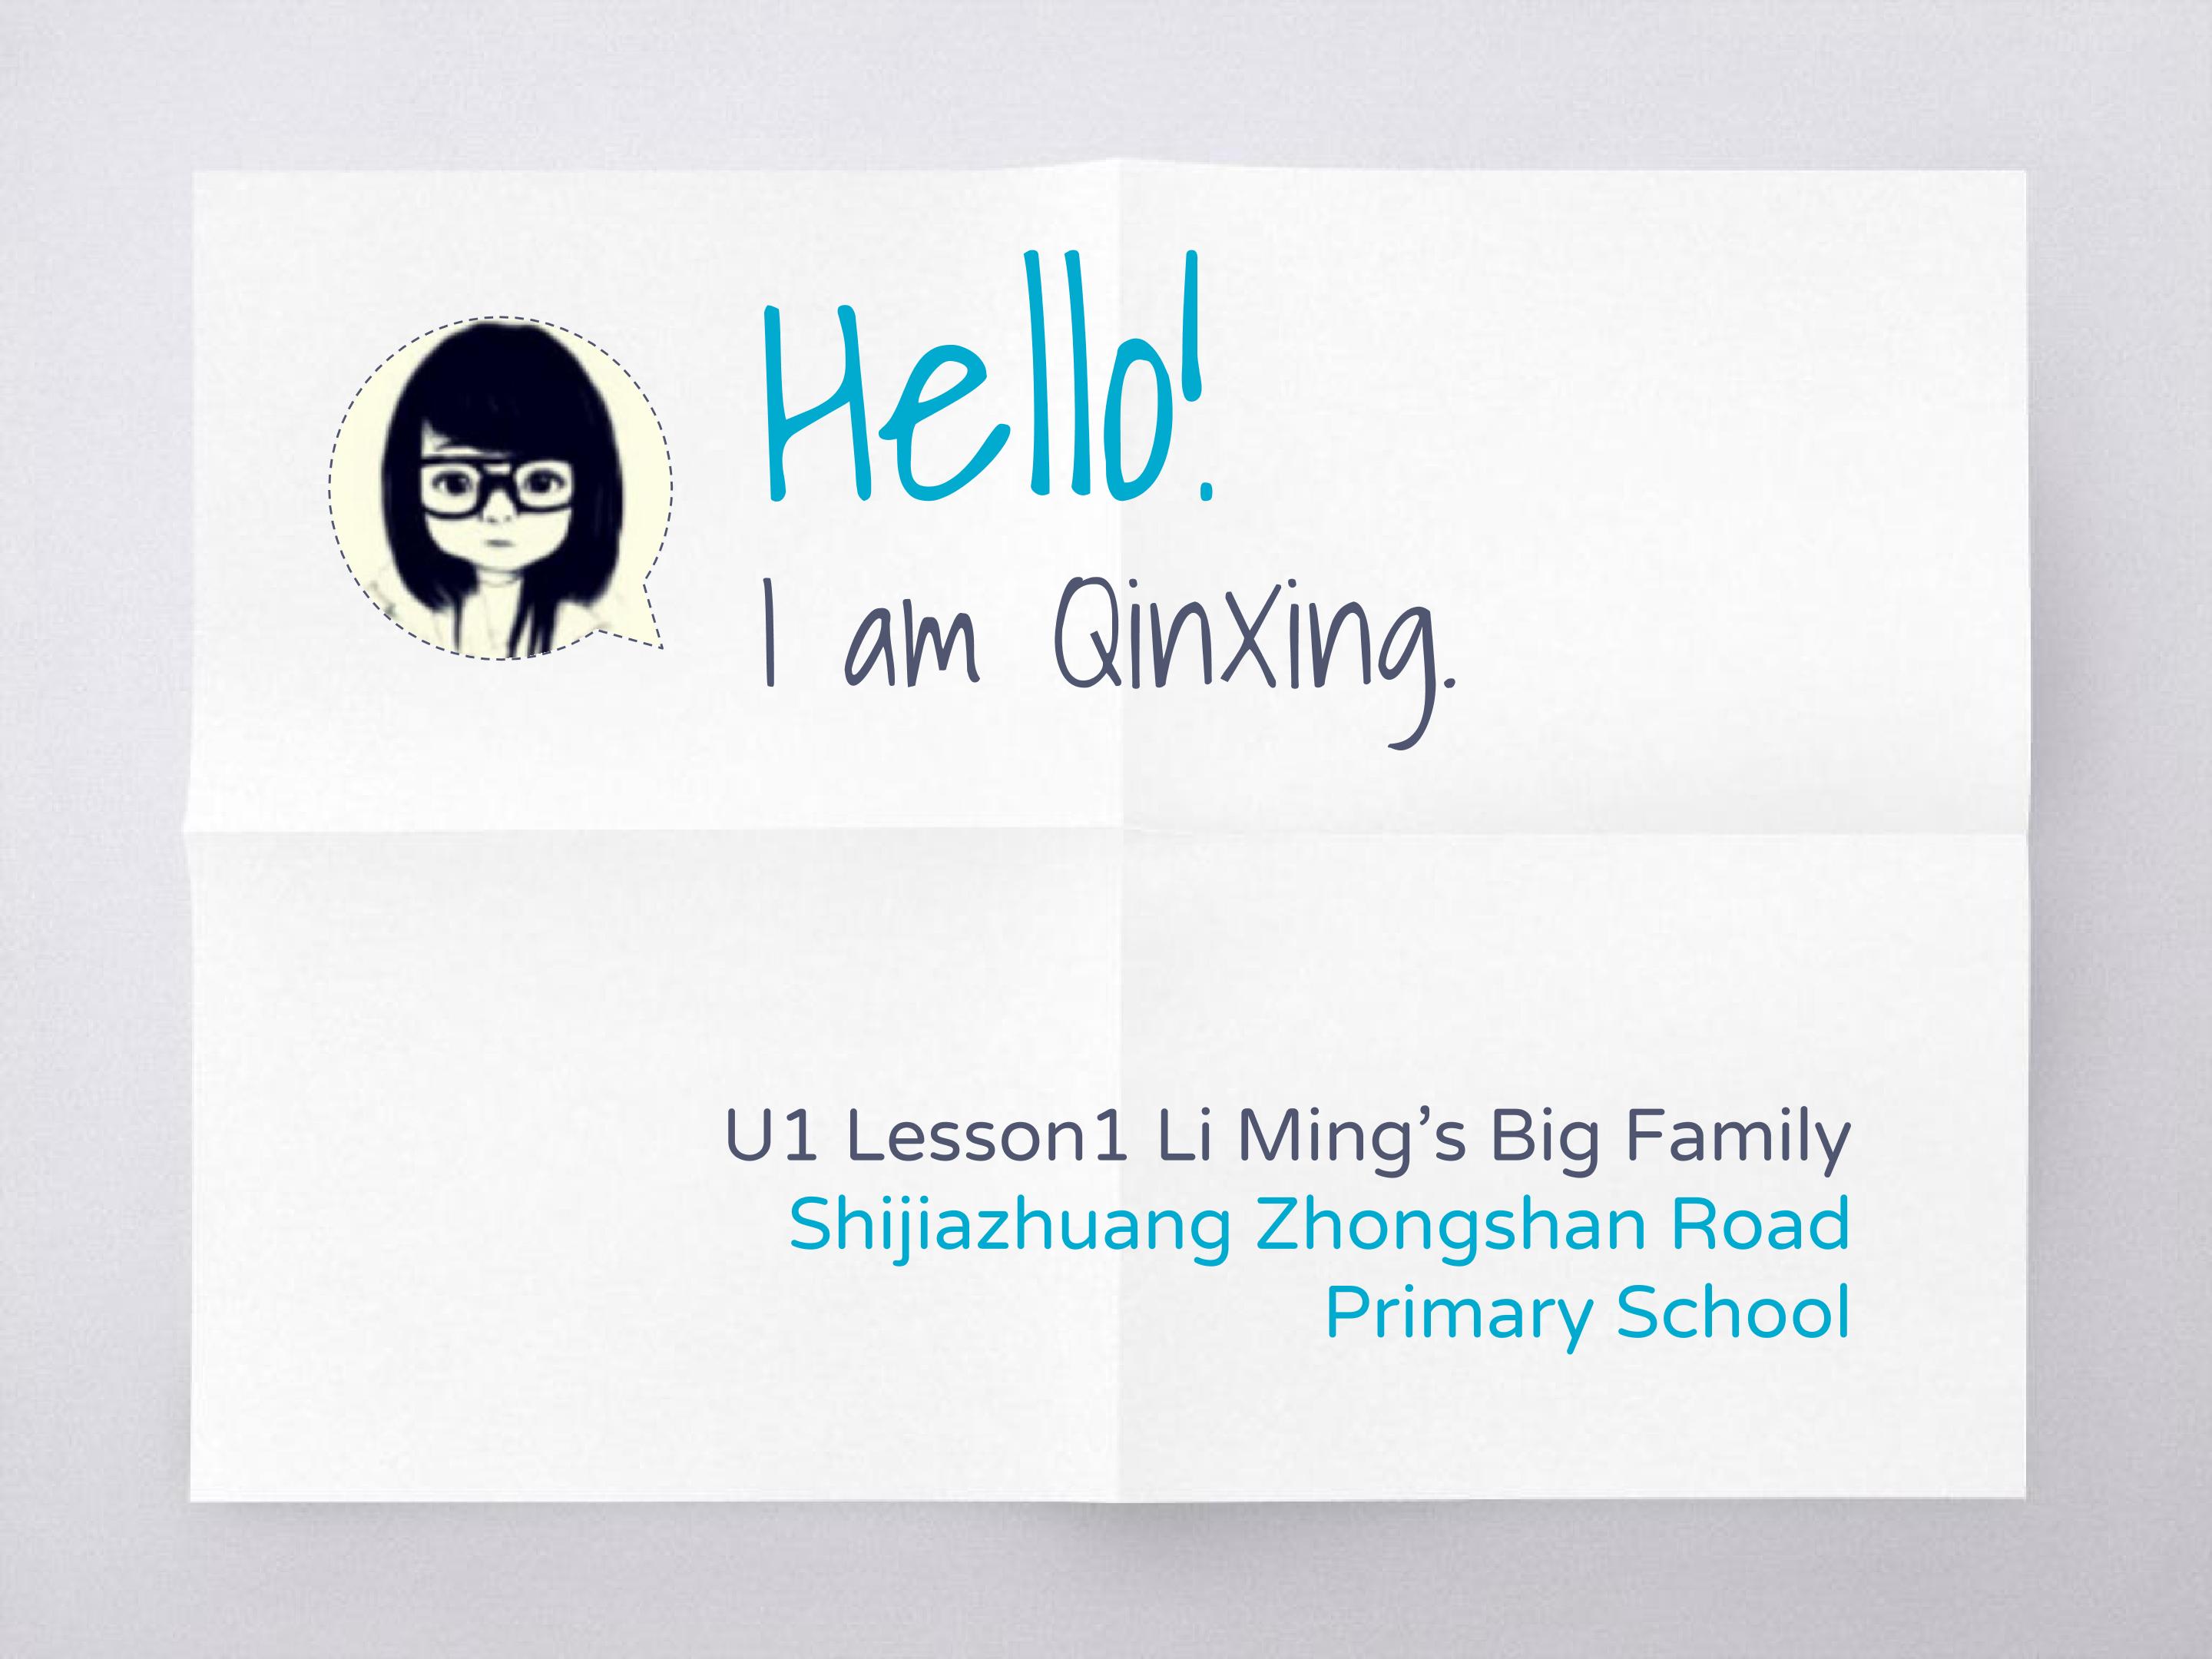 Lesson1 Li Ming's Big Family